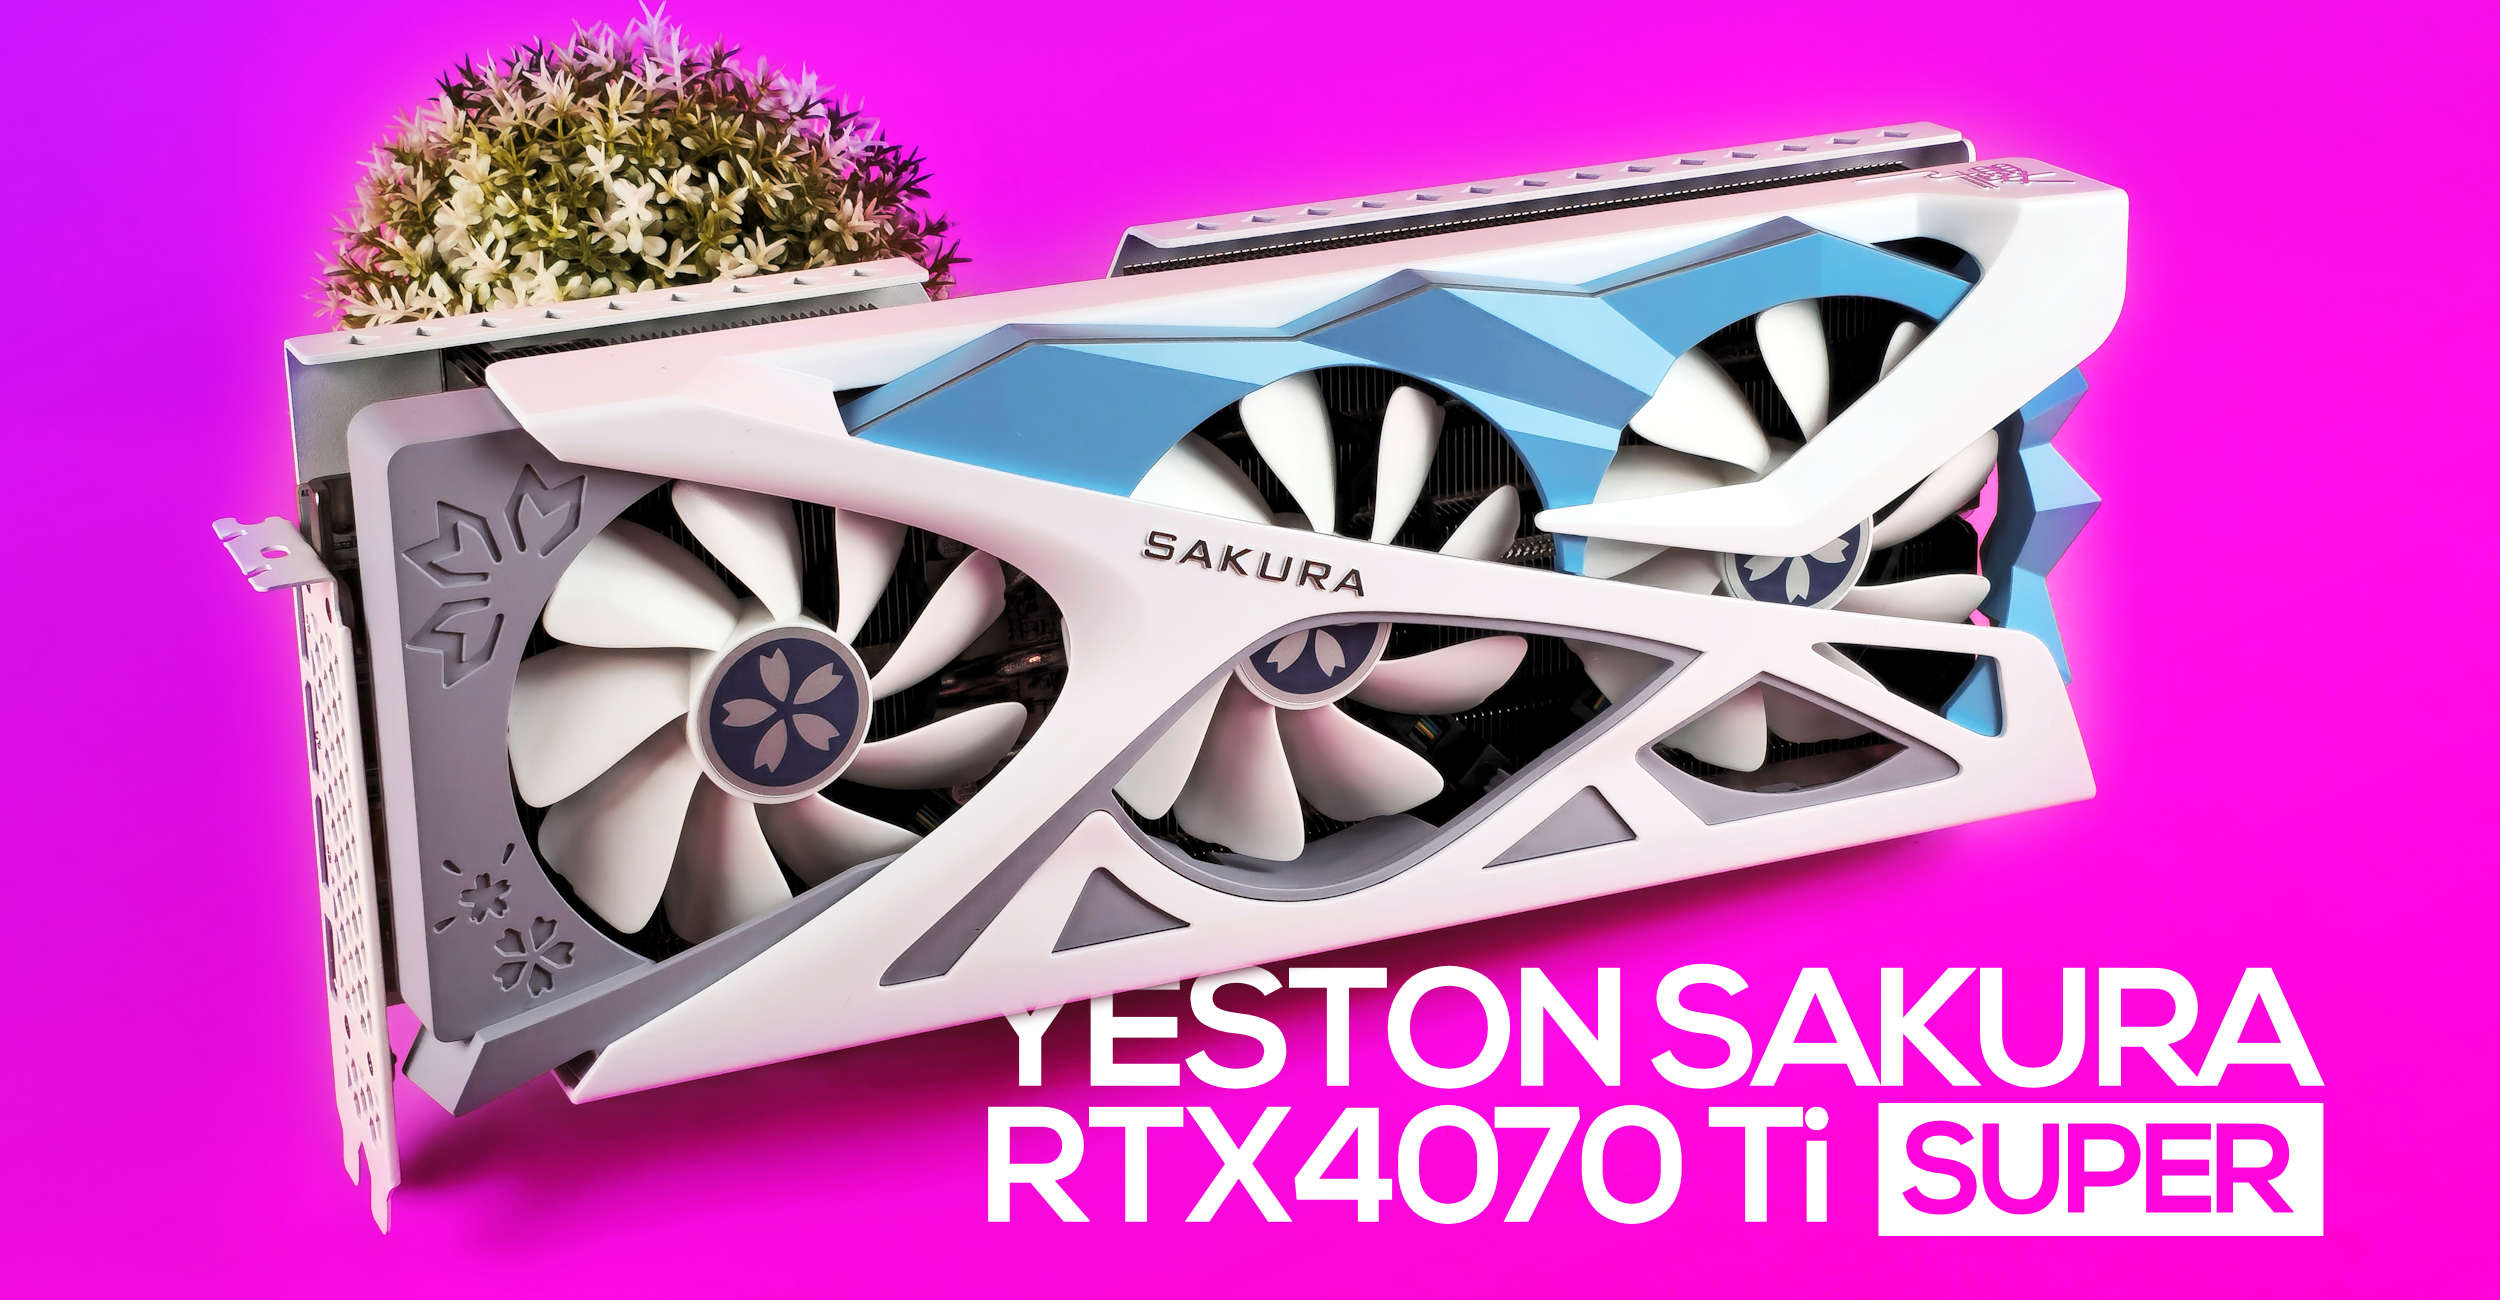 YESTON GeForce RTX 4070 Ti SUPER SAKURA Graphics Card Review 